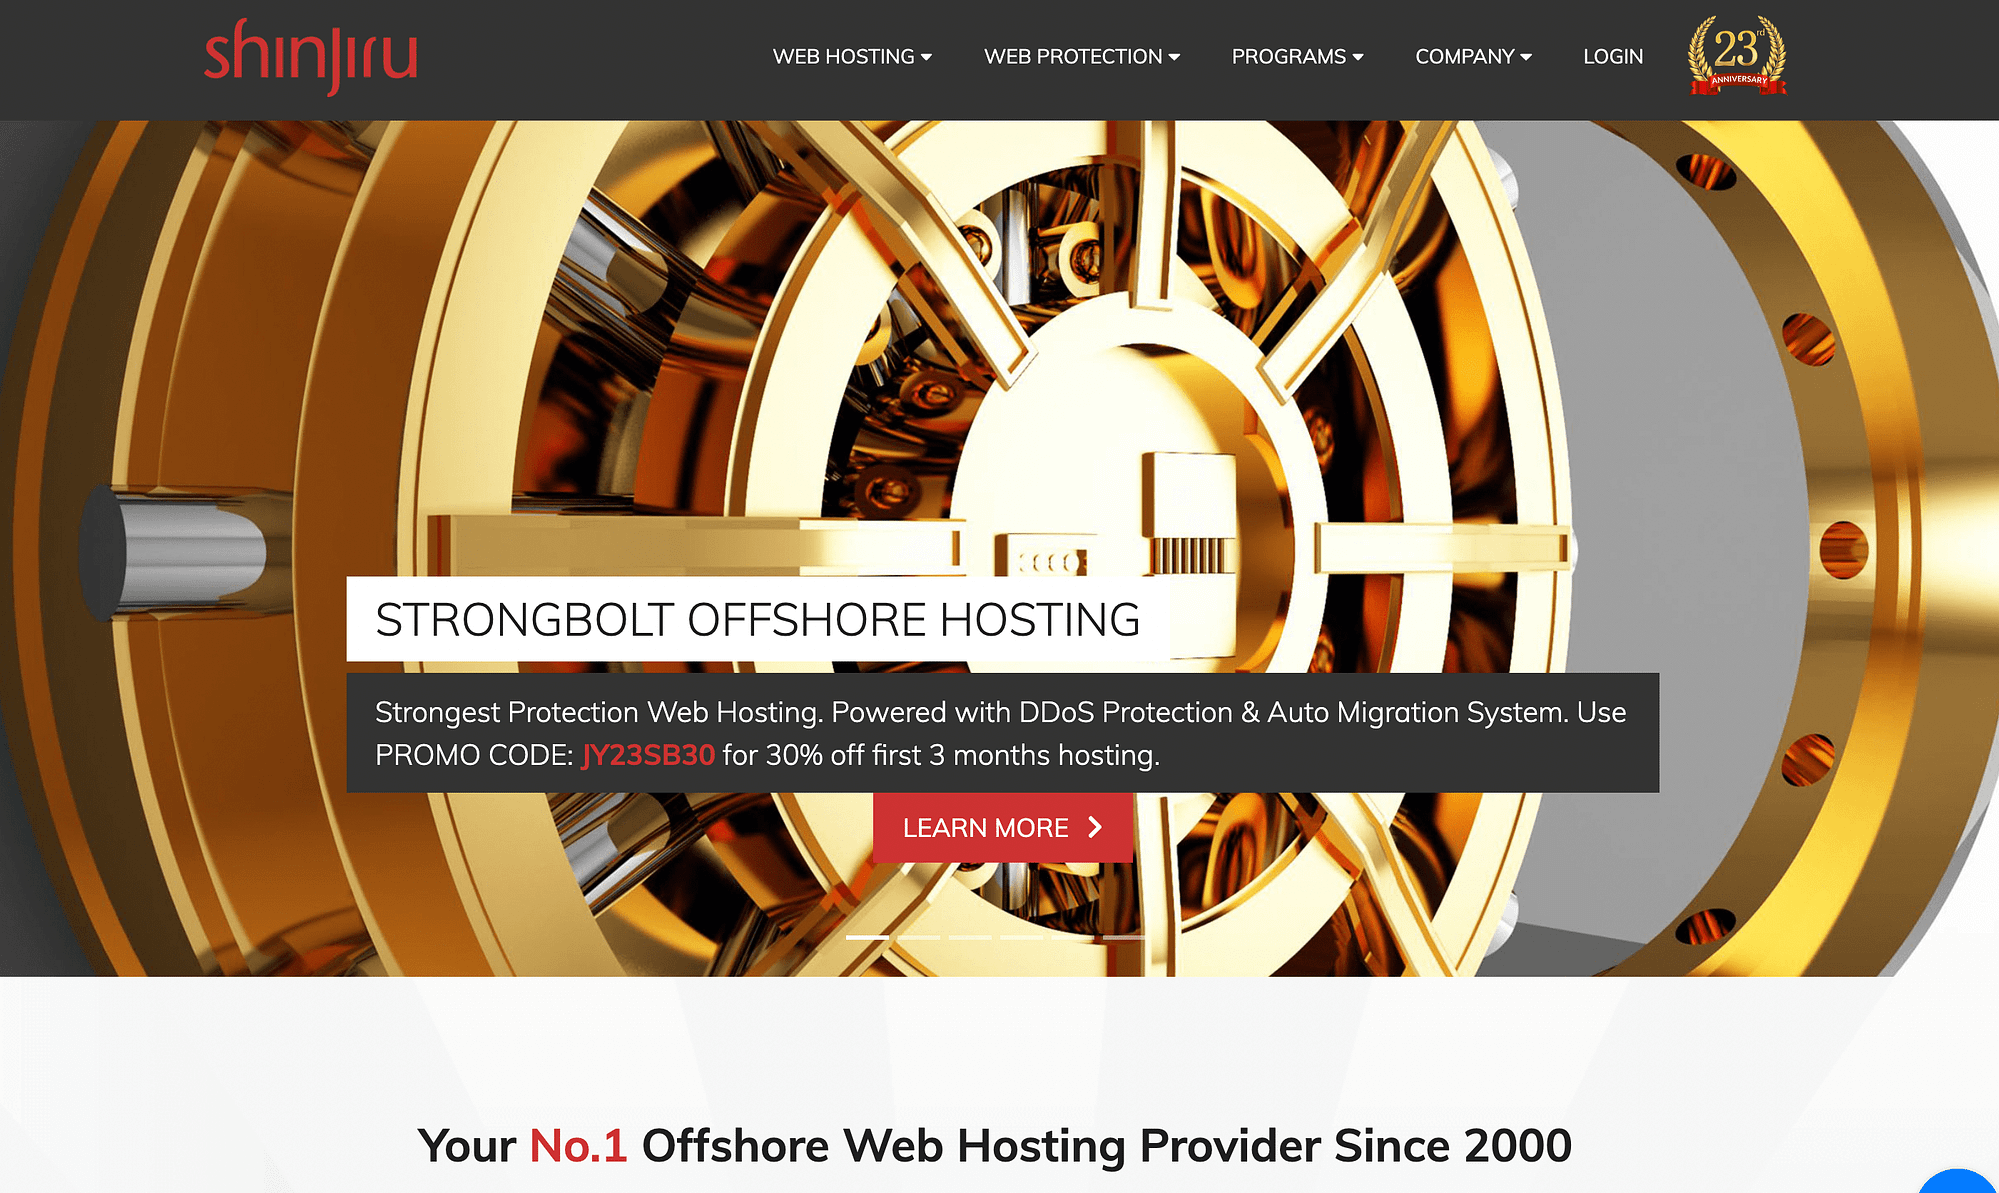 Shinjiru offers offshore web hosting.